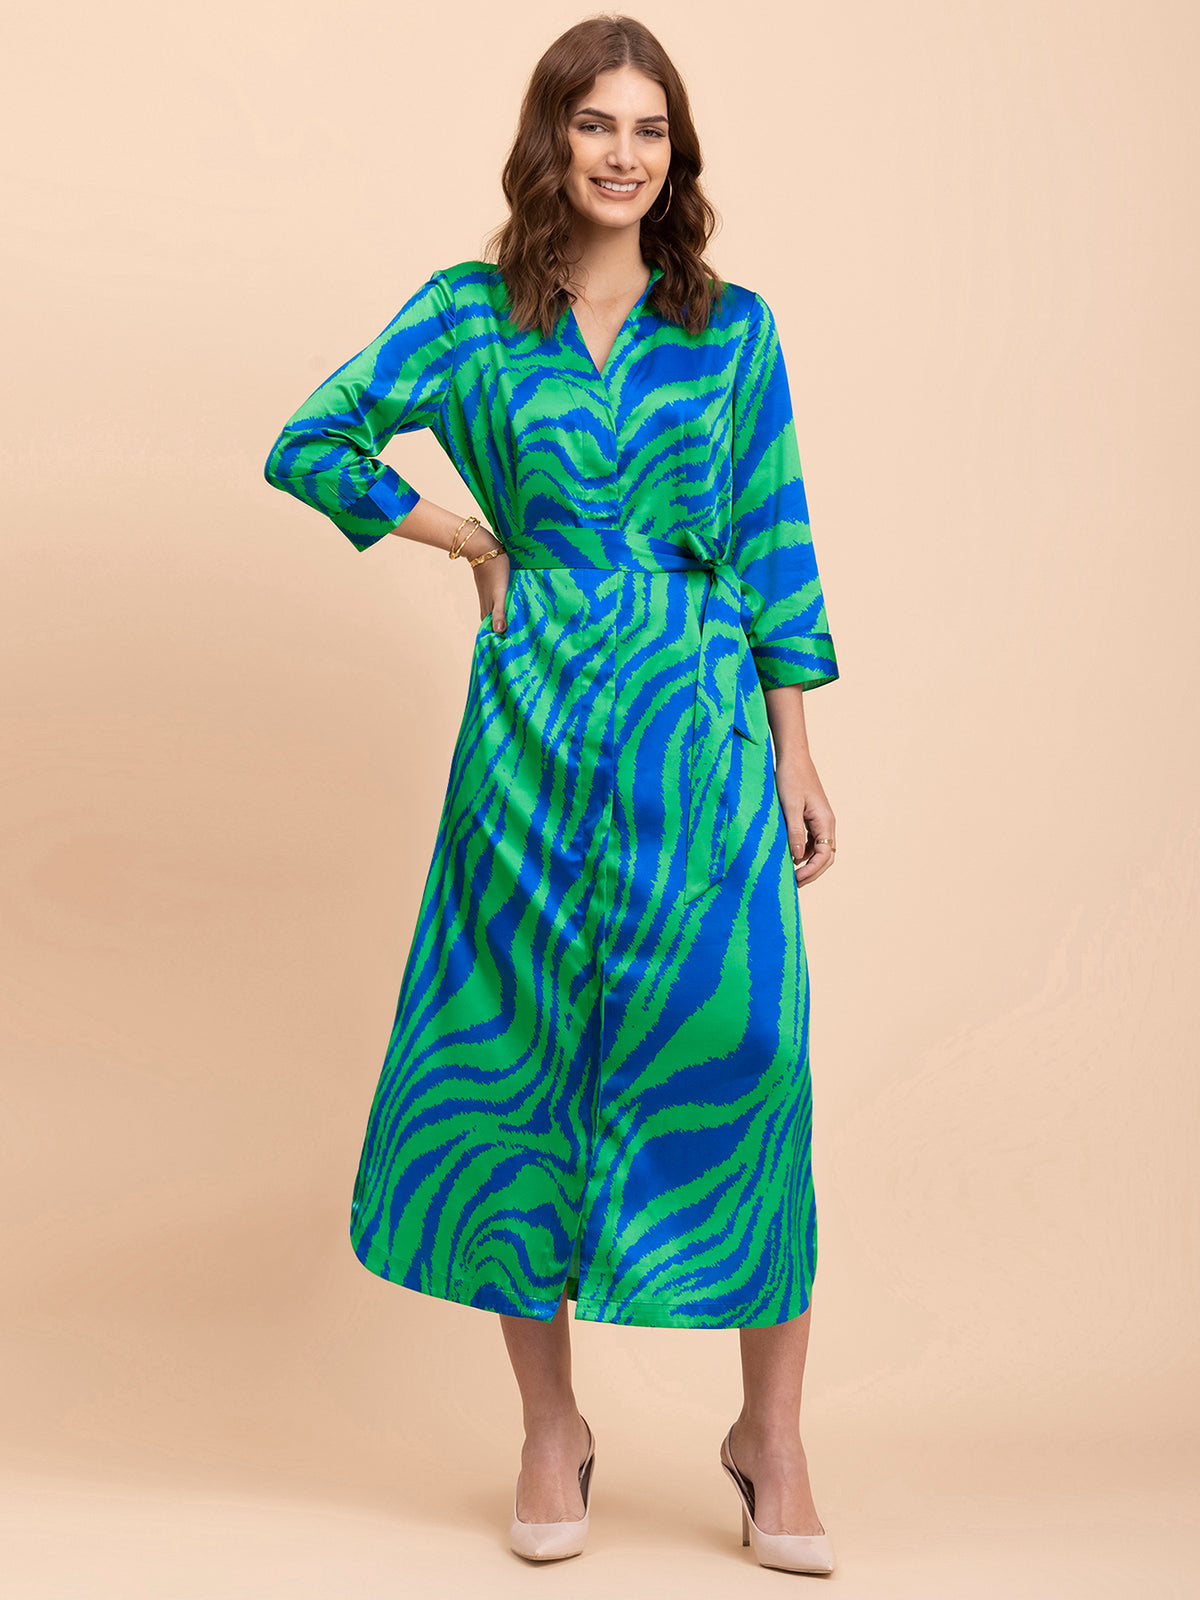 Satin Animal Print A-Line Dress - Royal Blue and Green